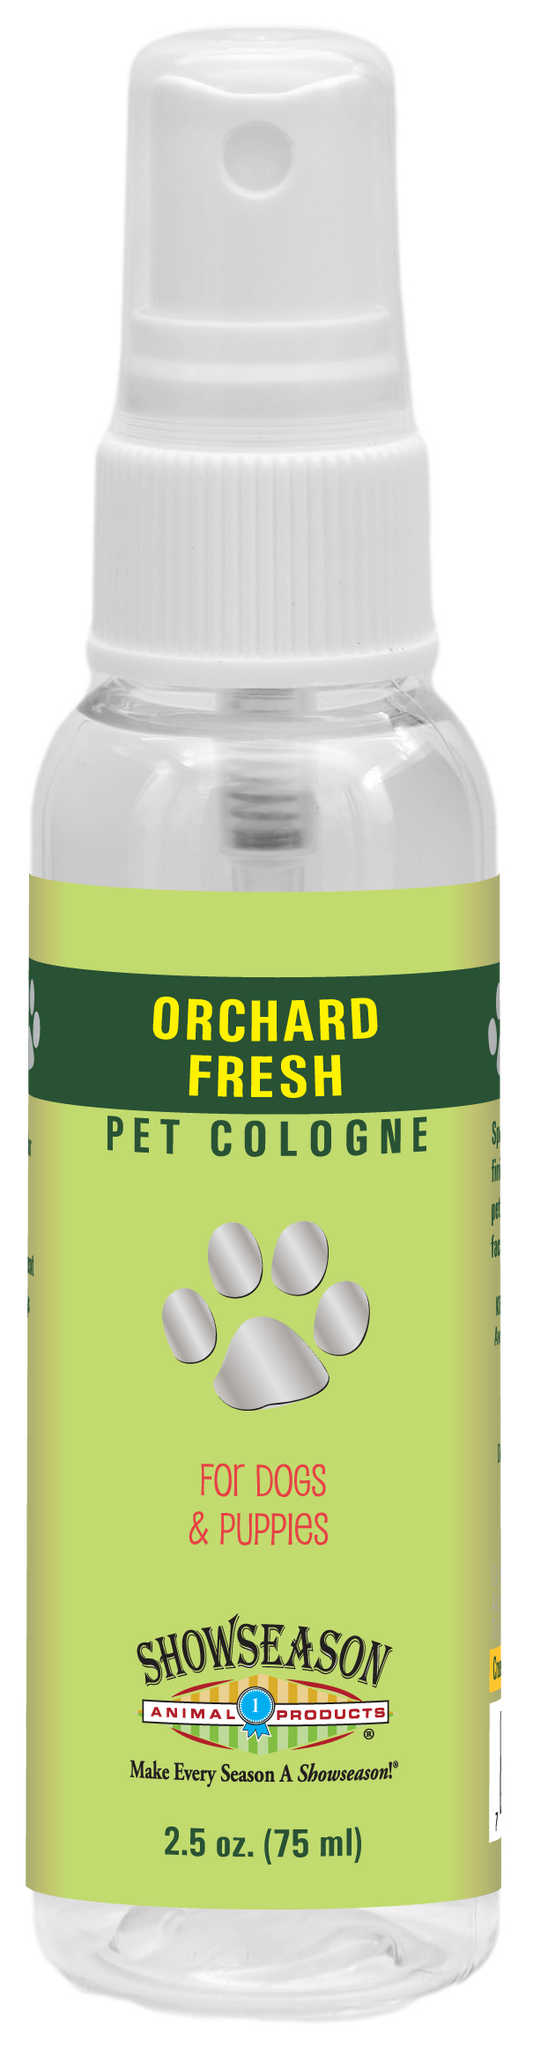 Orchard Fresh Pet Cologne | Showseason®